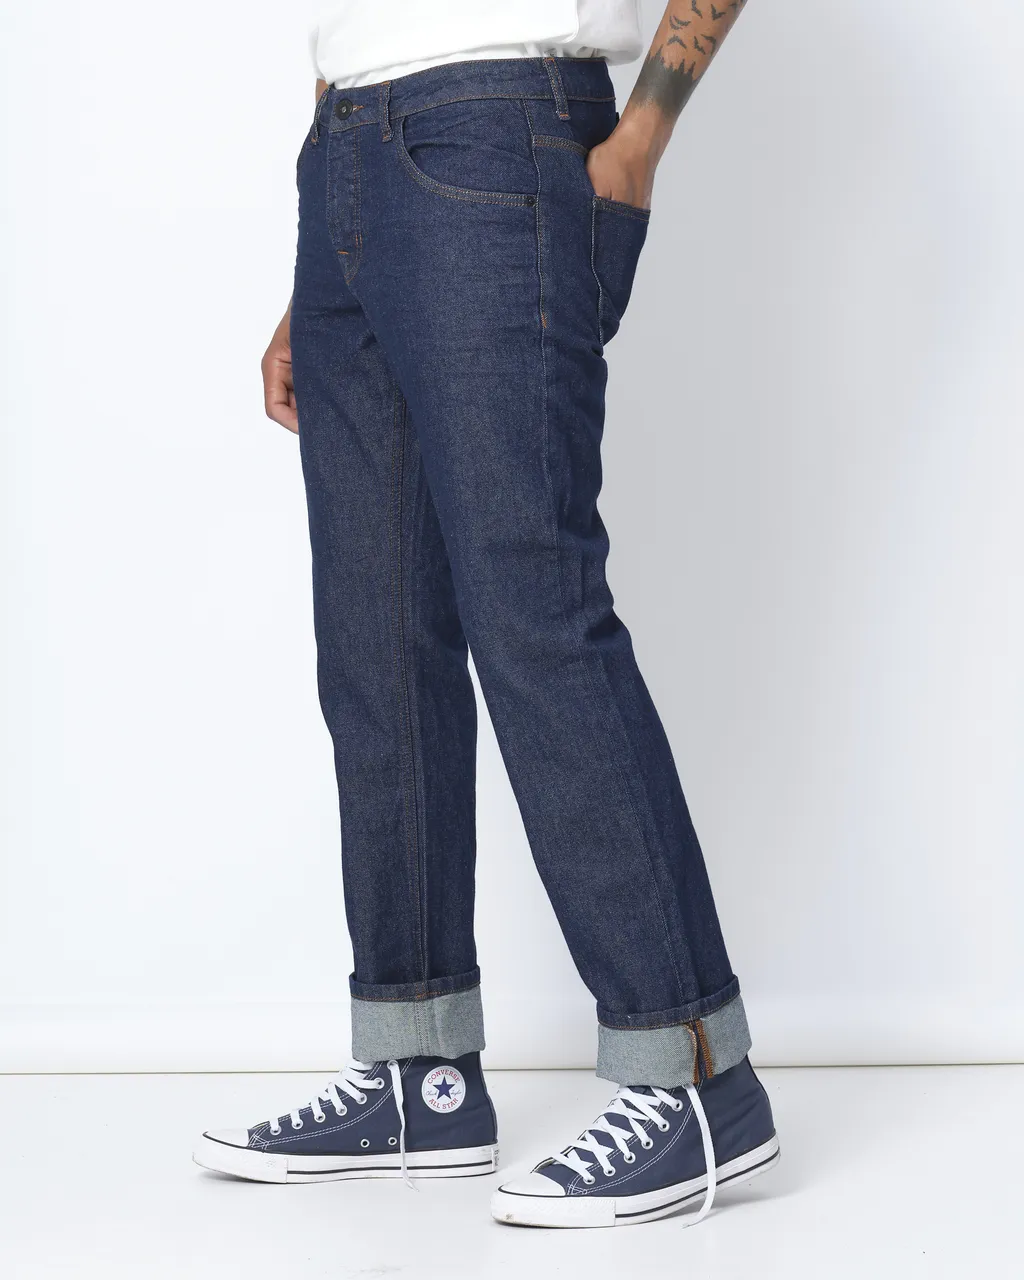 J.C. Rags Jethro jeans